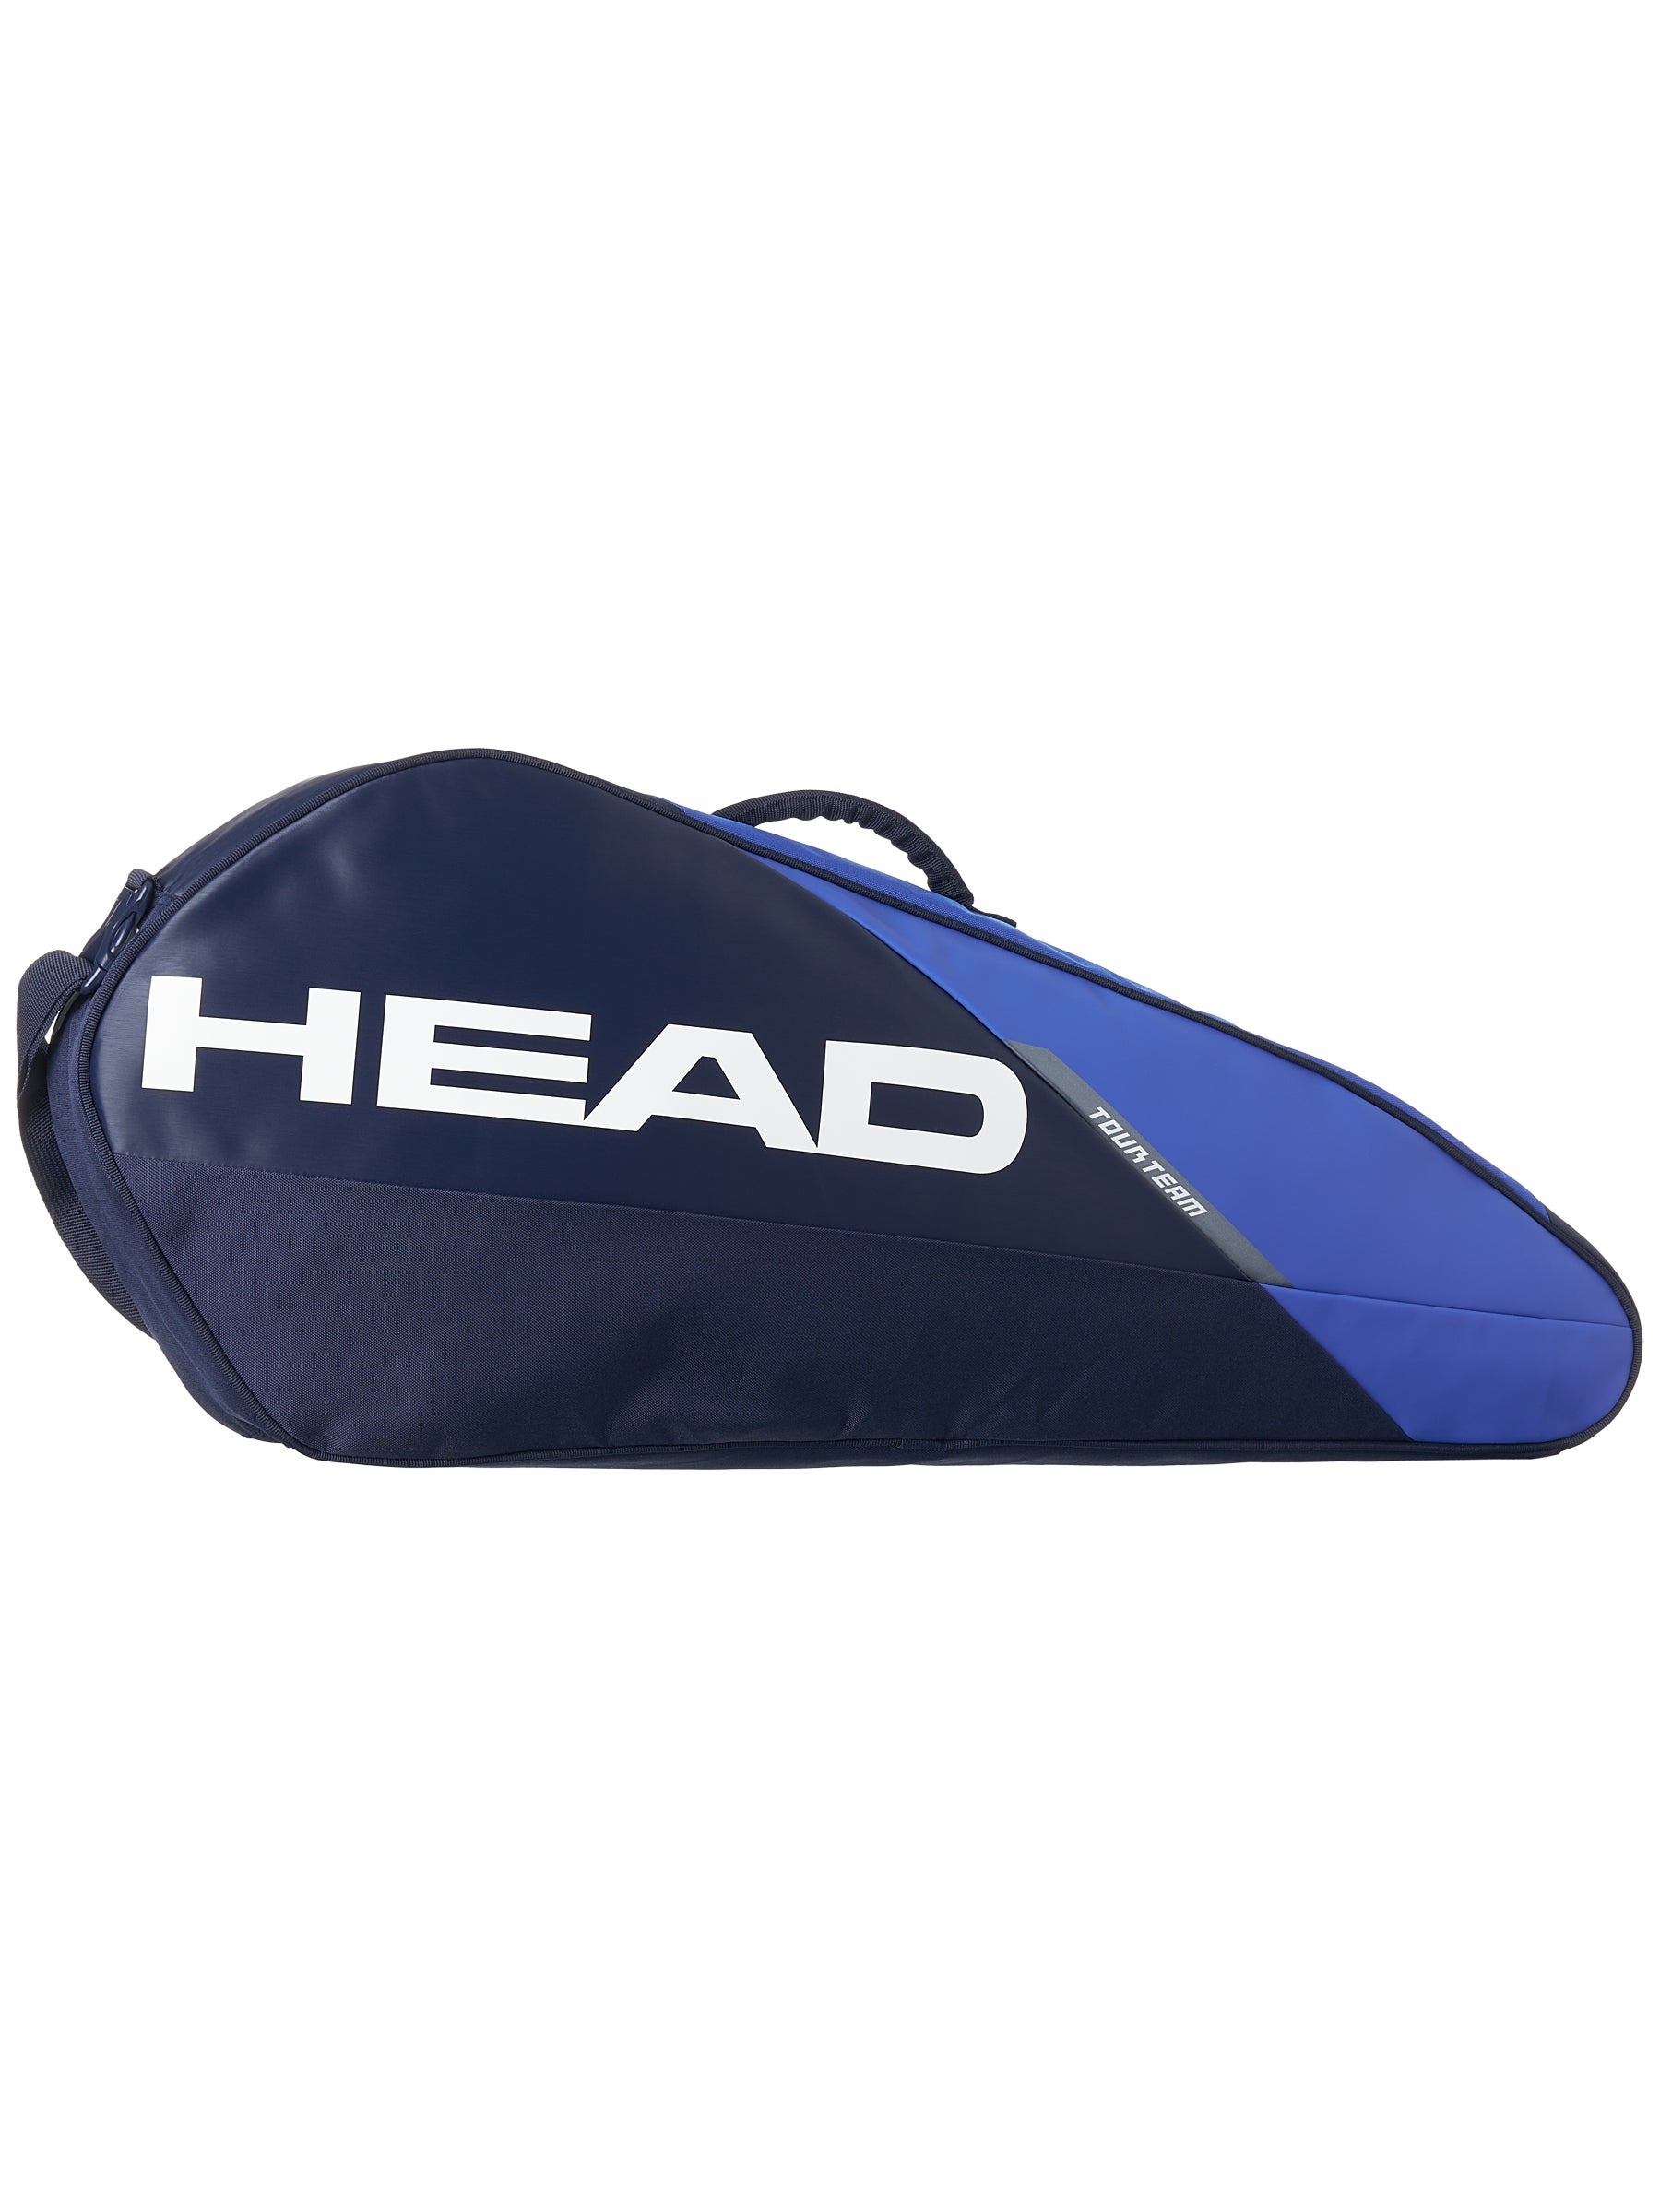 Head Womens Tote Bag Tennistasche 